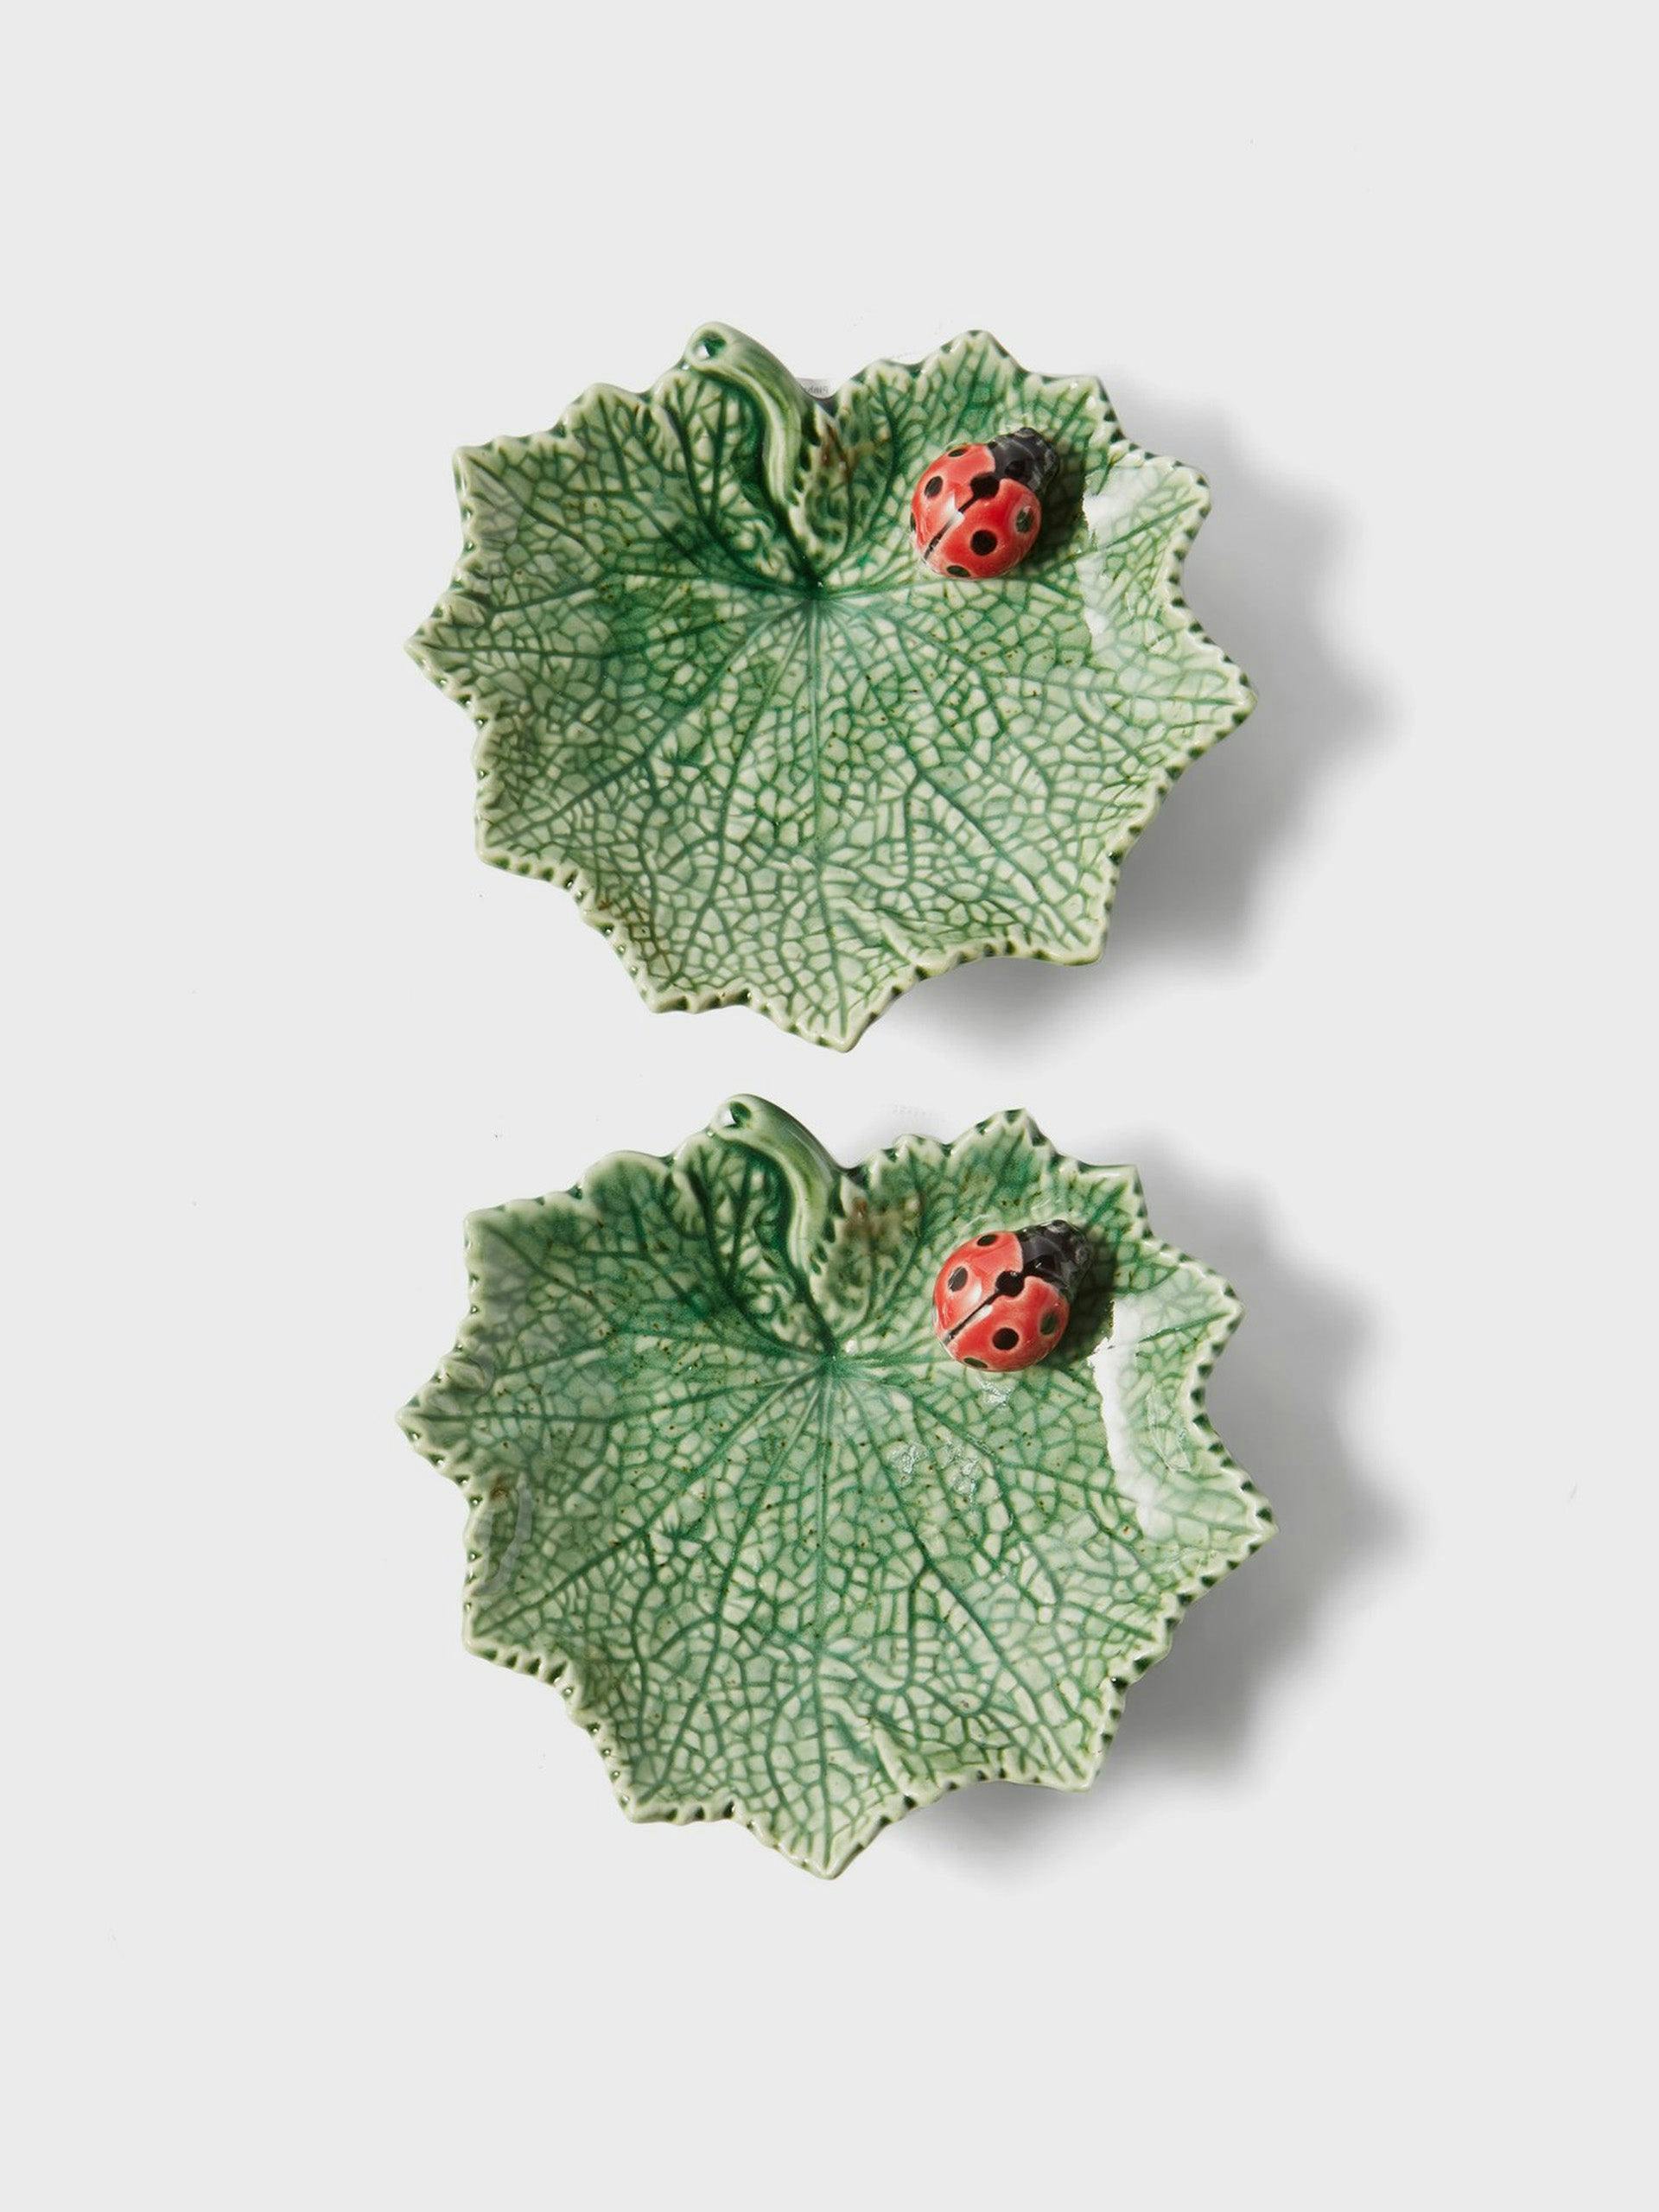 Leaf and Ladybug earthenware plates (set of 2)